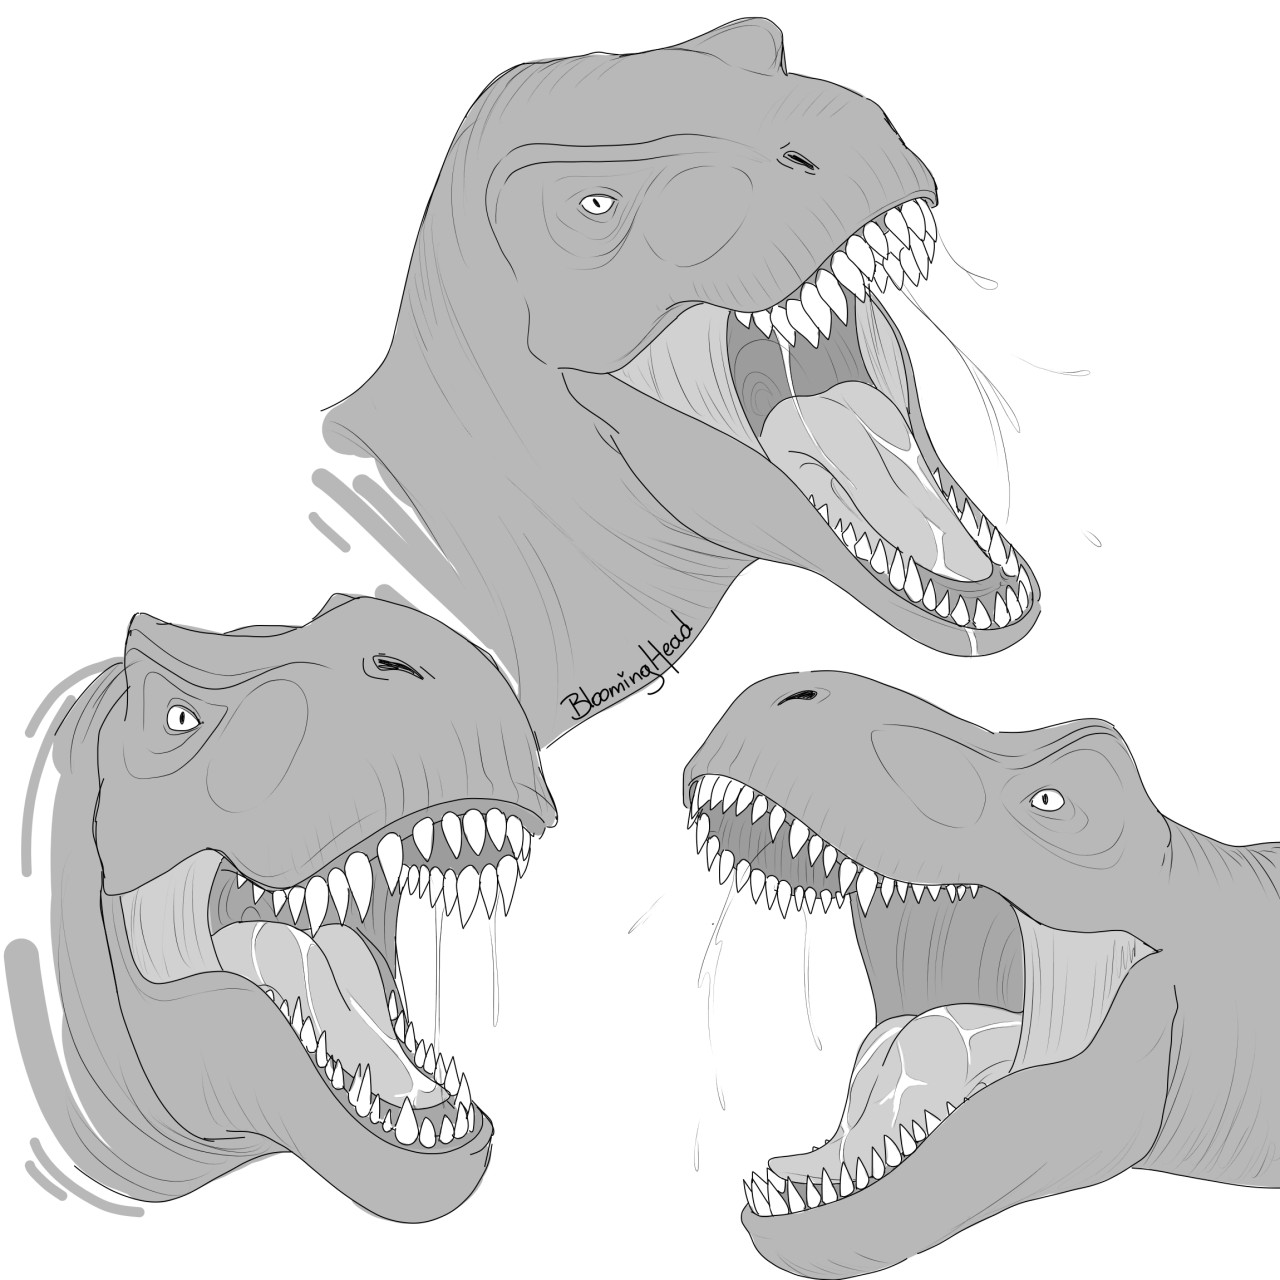 How to Draw Tyrannosaurus Rex (Rexy) dominating Carnotaurus | Jurassic World:  Fallen Kingdom - YouTube